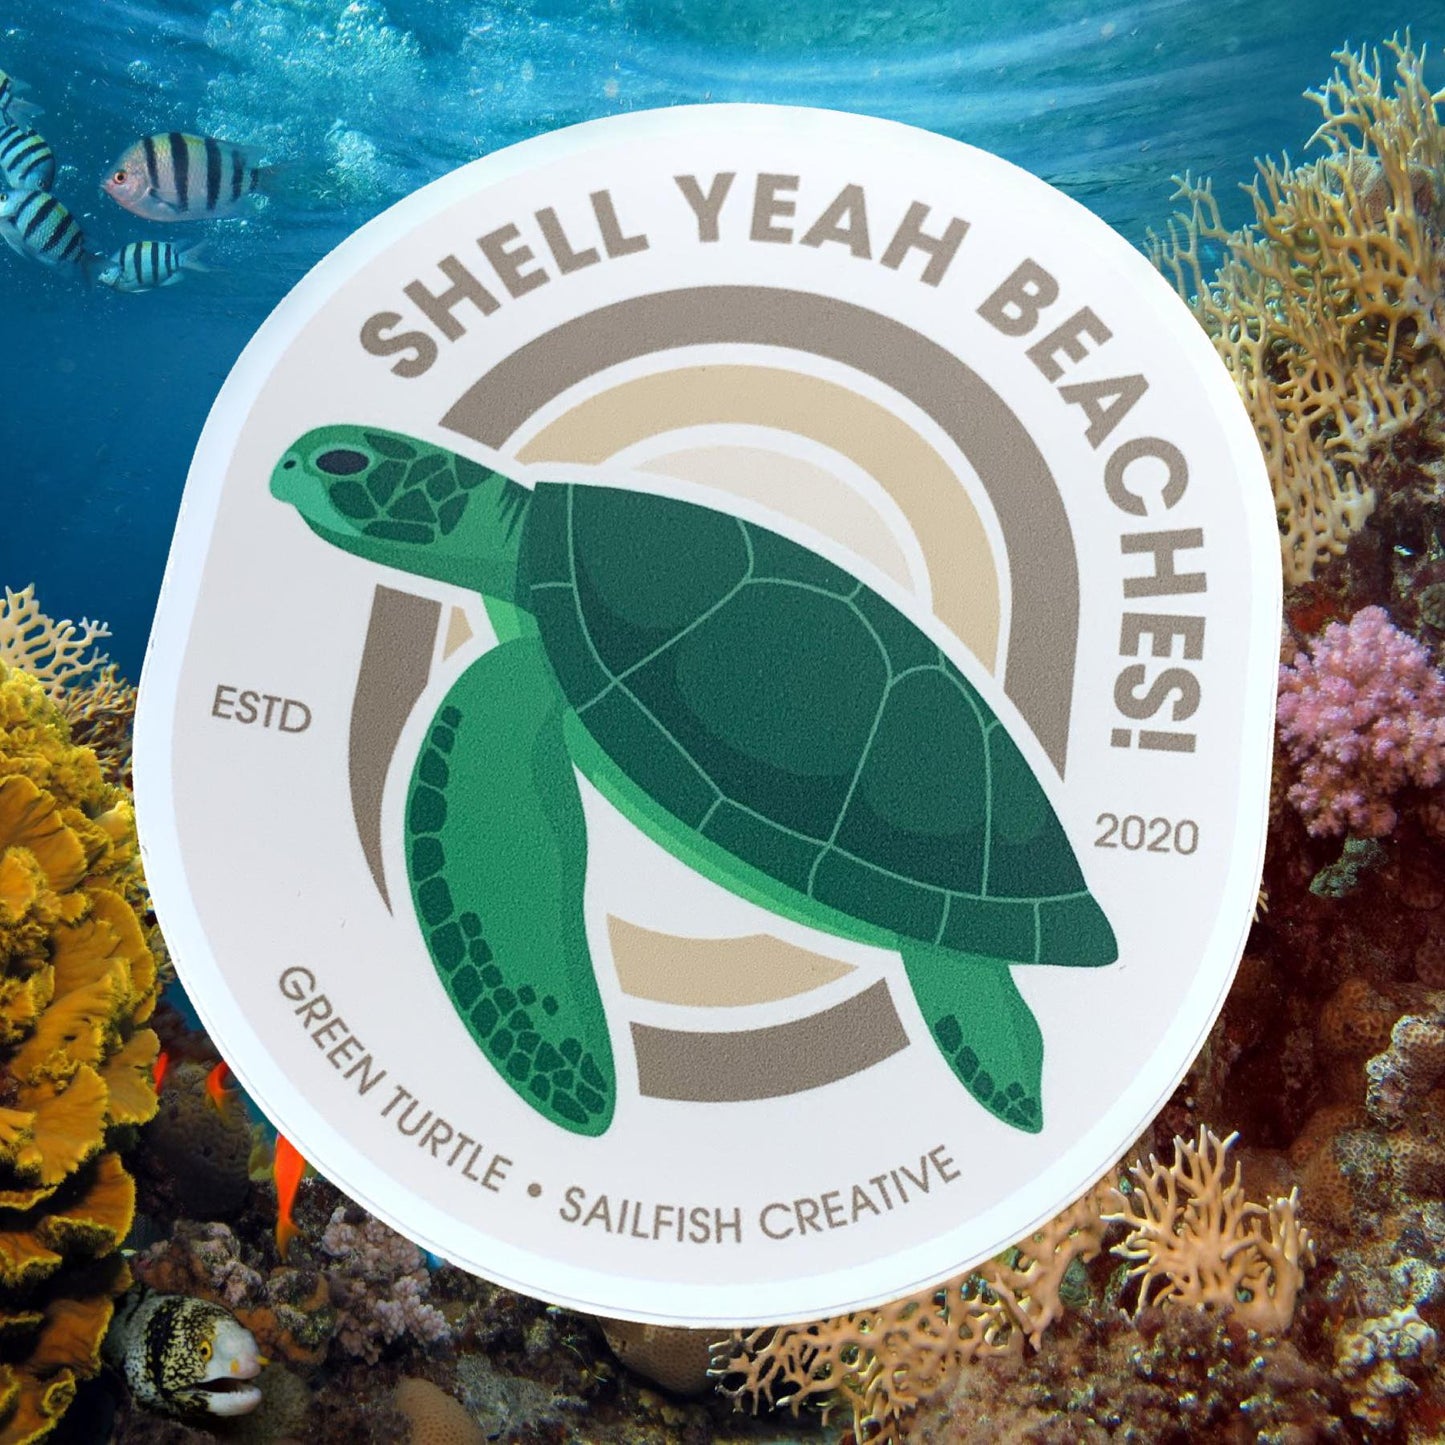 SAILFISH CREATIVE- "Shell Yeah Beaches" Turtle Pun Vinyl Sticker